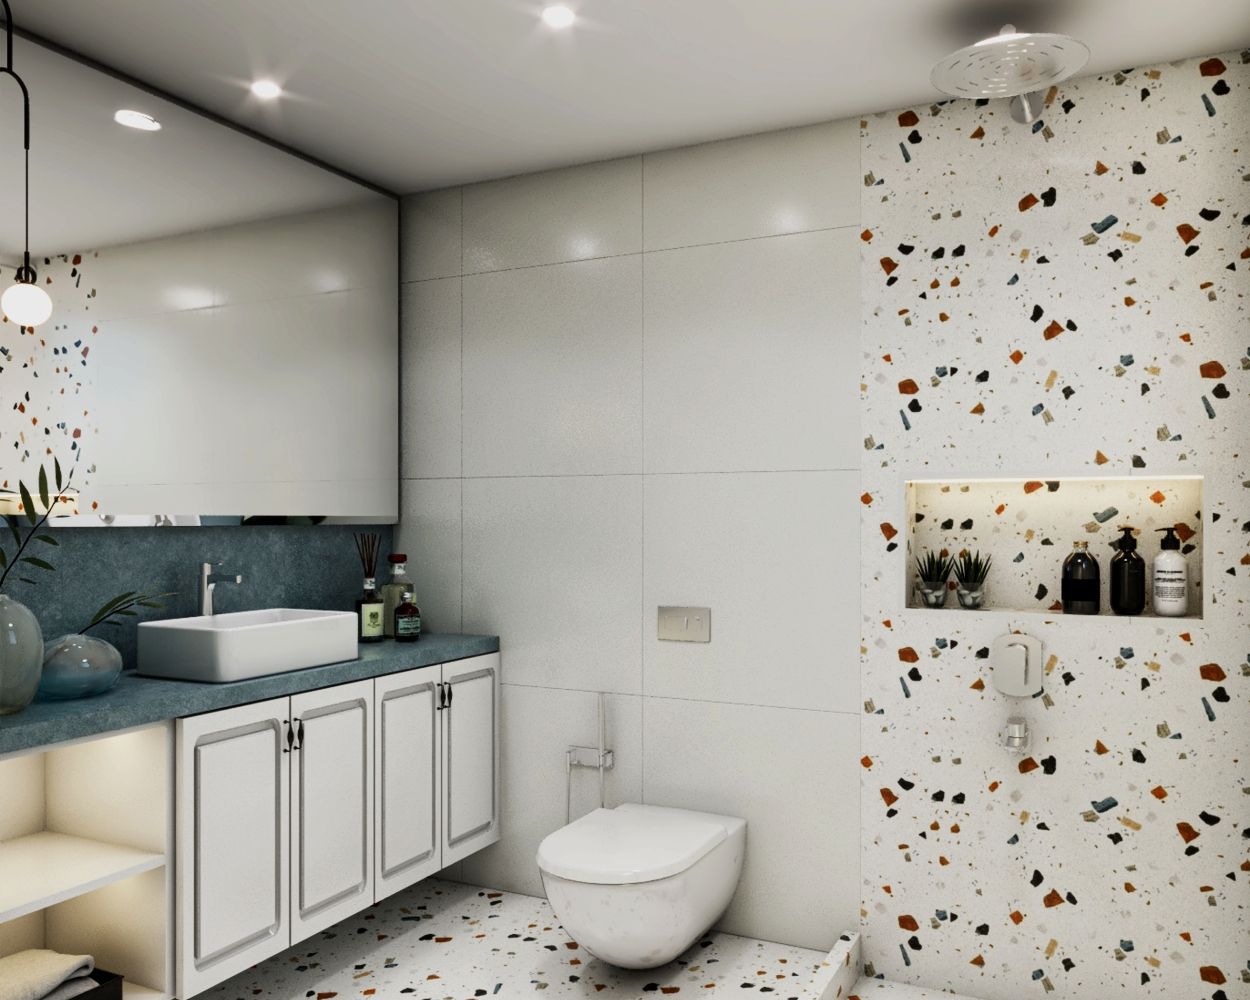 Modern White Small Bathroom Design With Pendant Light